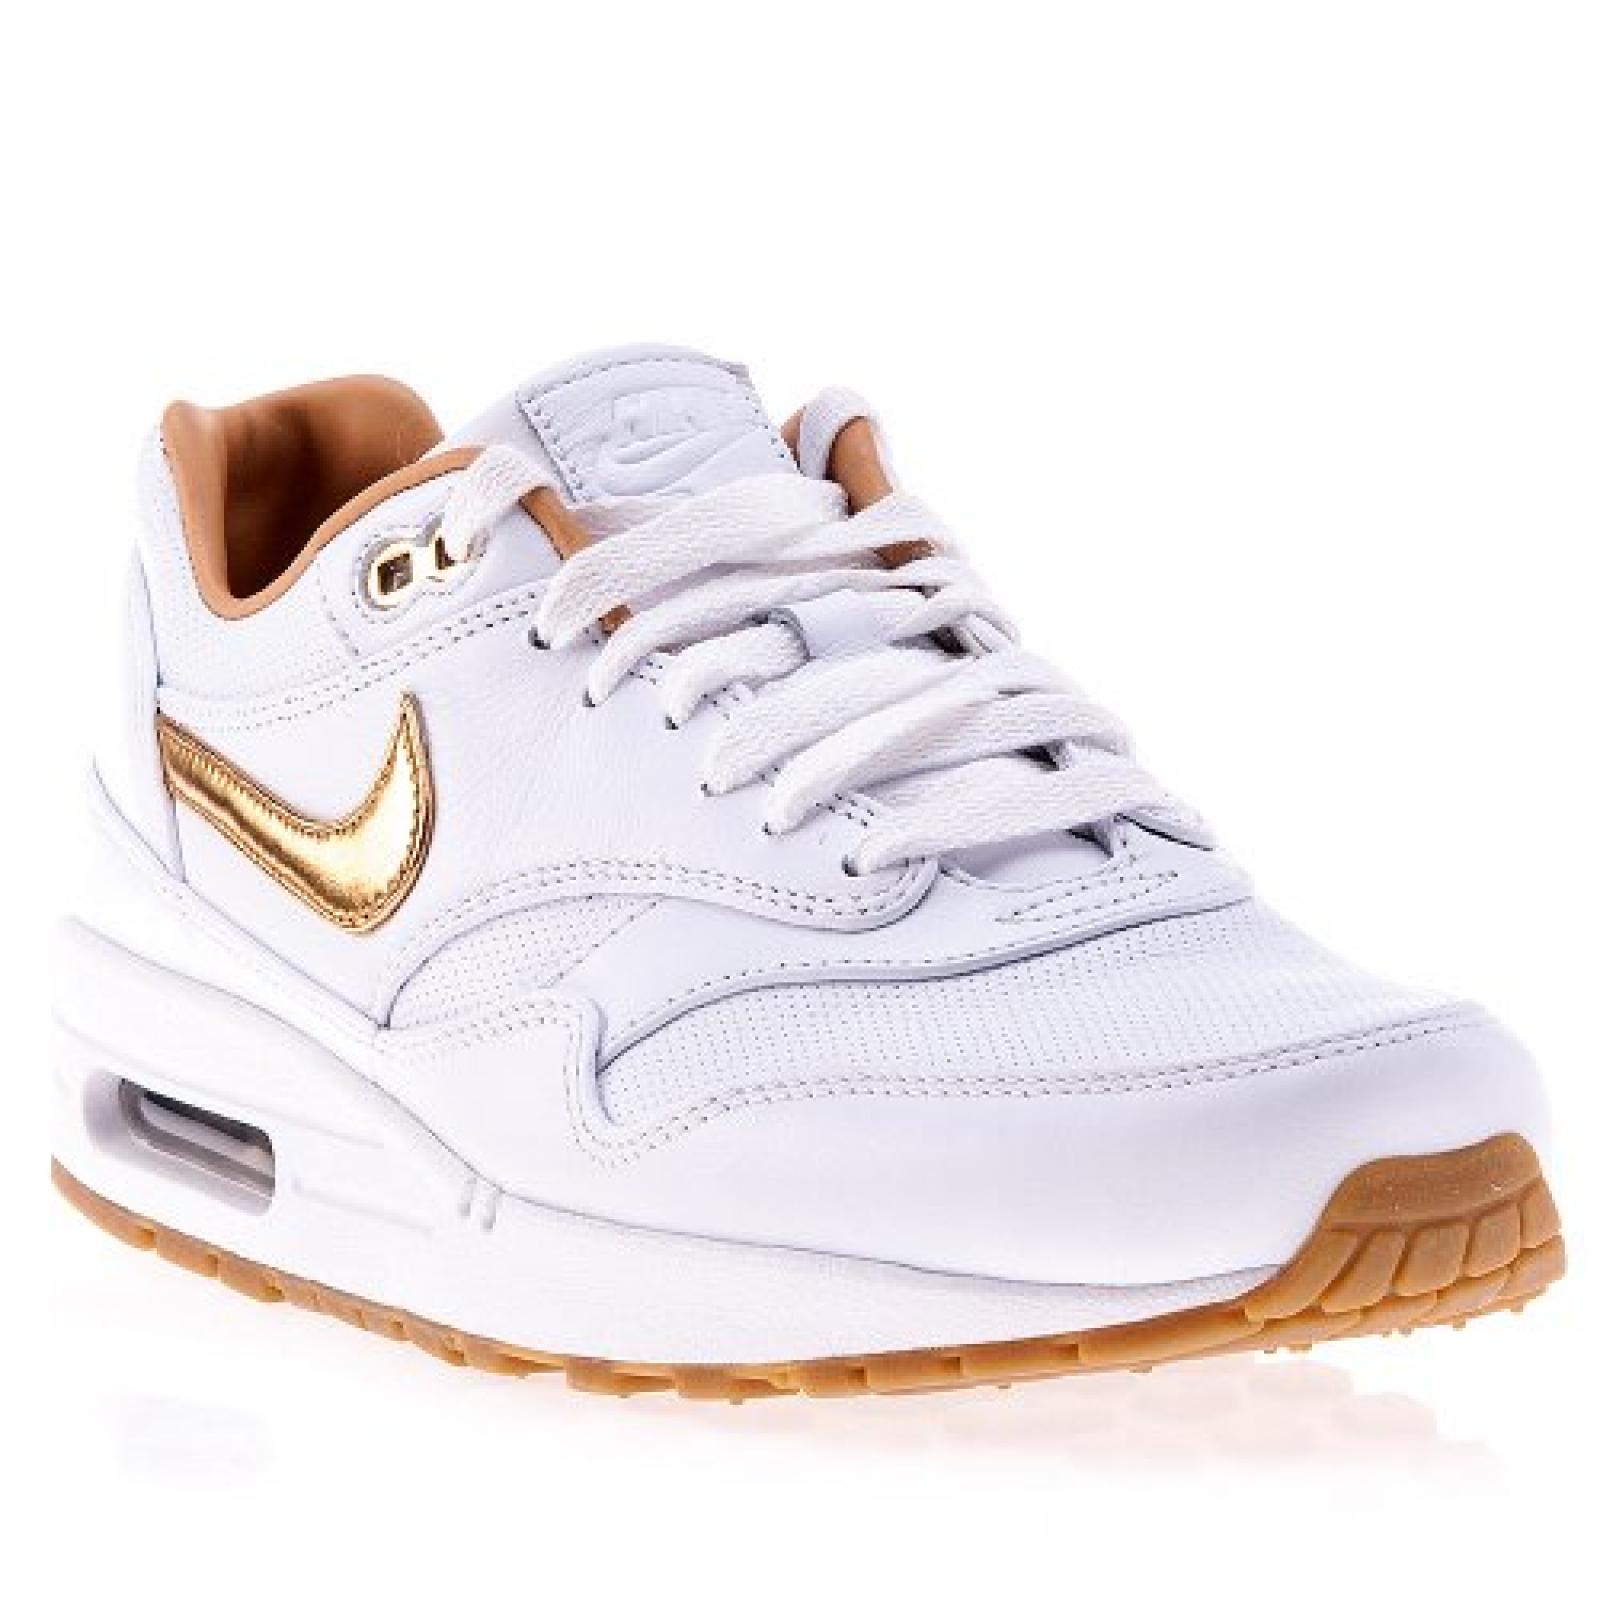 Nike Herren Schuhe "AIR MAX 1 FB WOVEN" white/metallic gold-light brown 